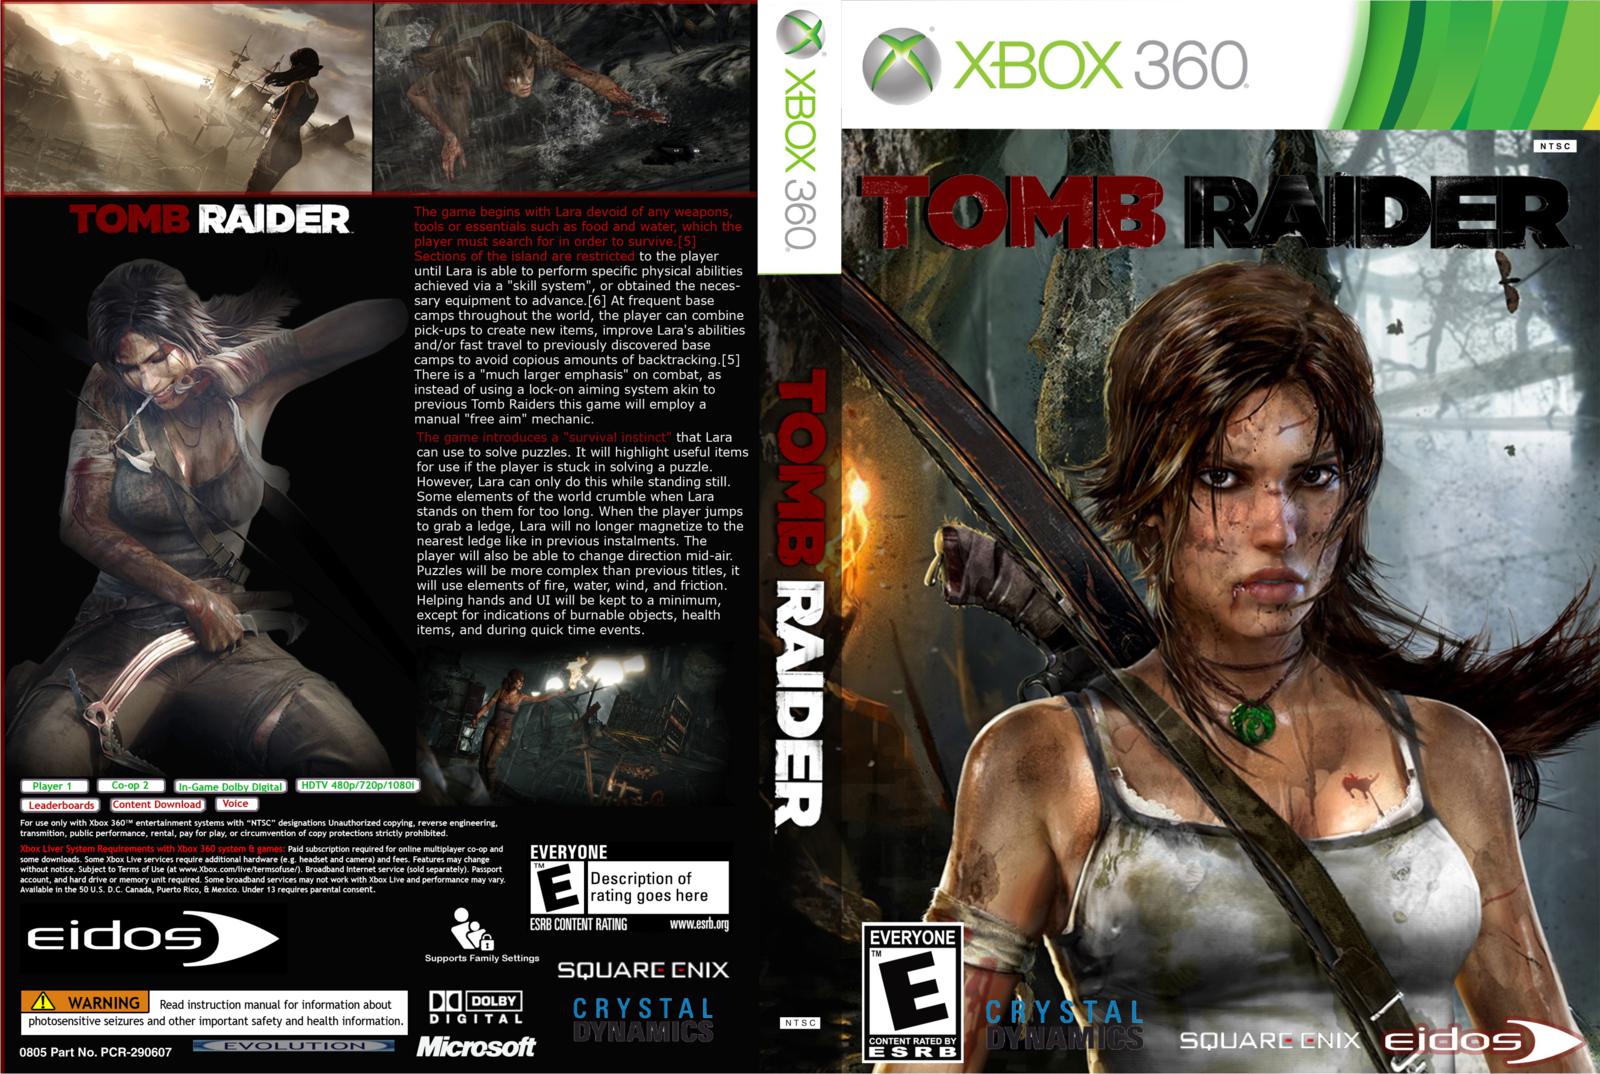 Download - Tomb Raider (2013) - XBOX 360 - ISO